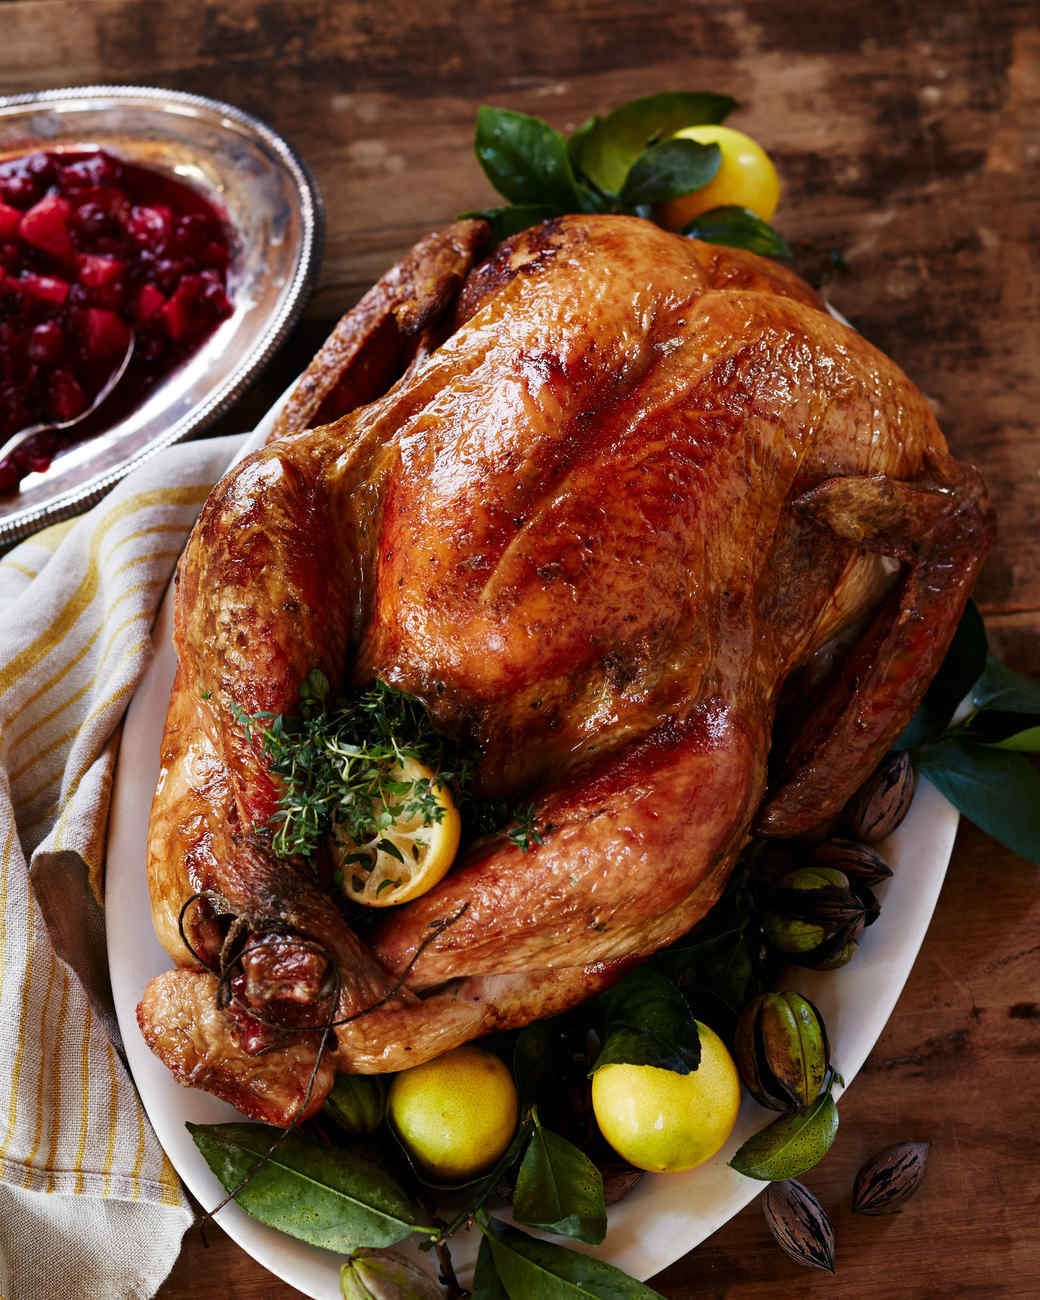 Martha Stewart Thanksgiving Turkey
 A Virginia Family s Thanksgiving Recipes